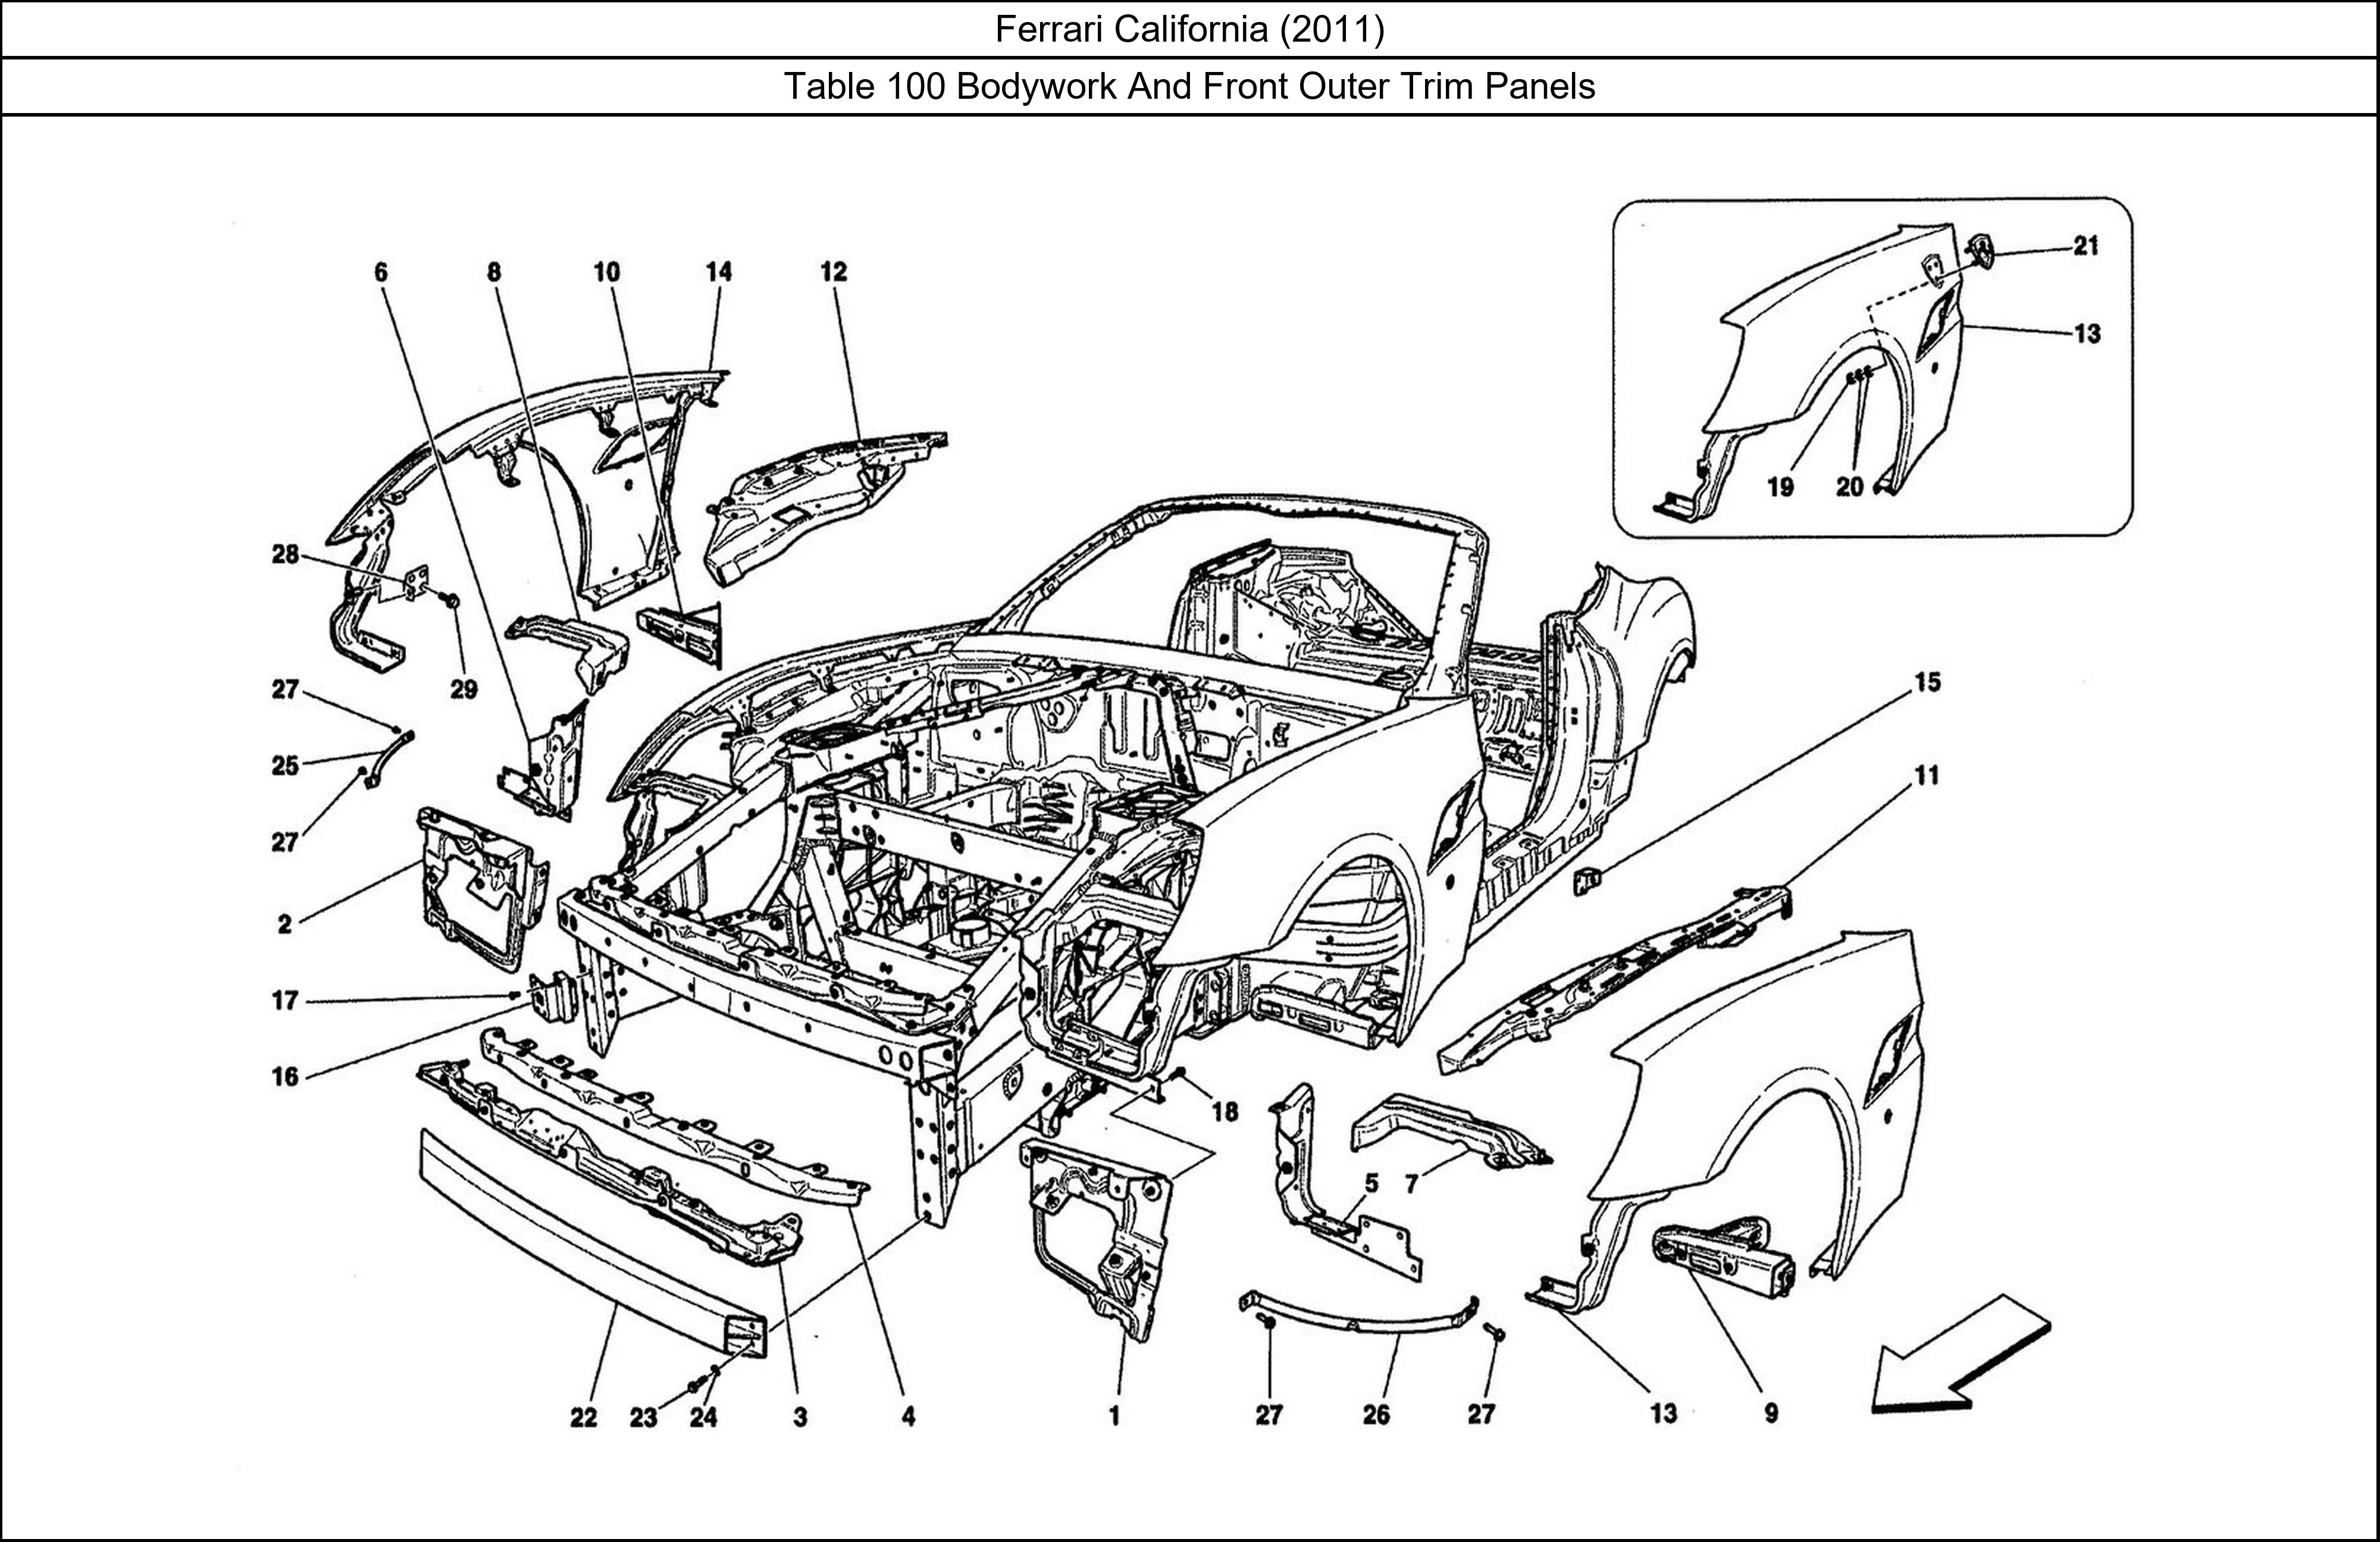 Ferrari Parts Ferrari California (2011) Table 100 Bodywork And Front Outer Trim Panels